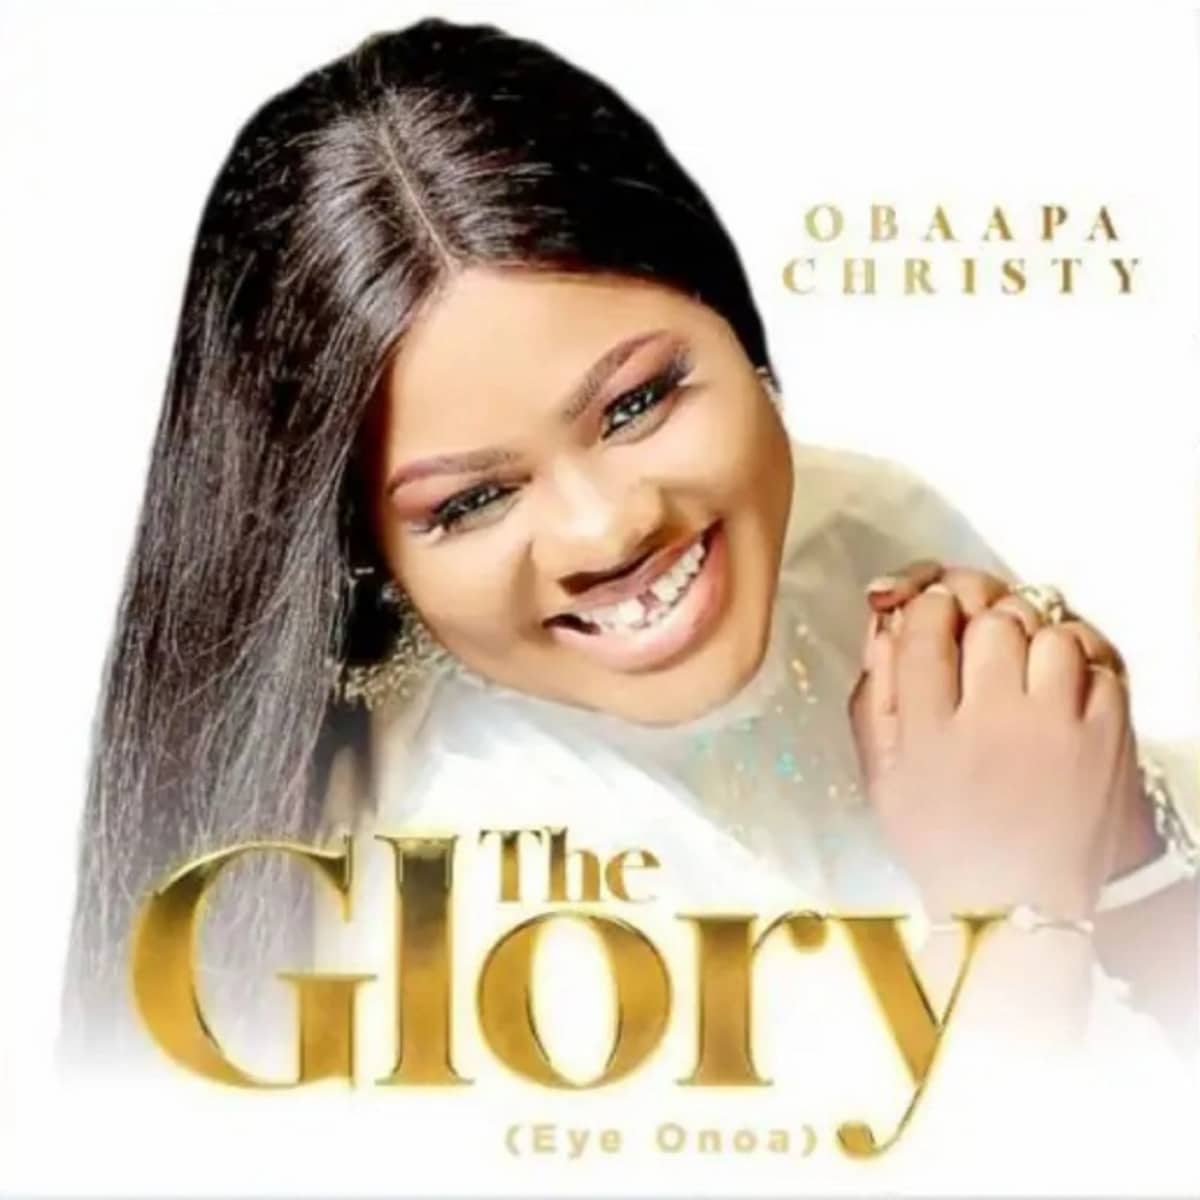 DOWNLOAD: Obaapa Christy – “The Glory” (Eye Onoa) Mp3